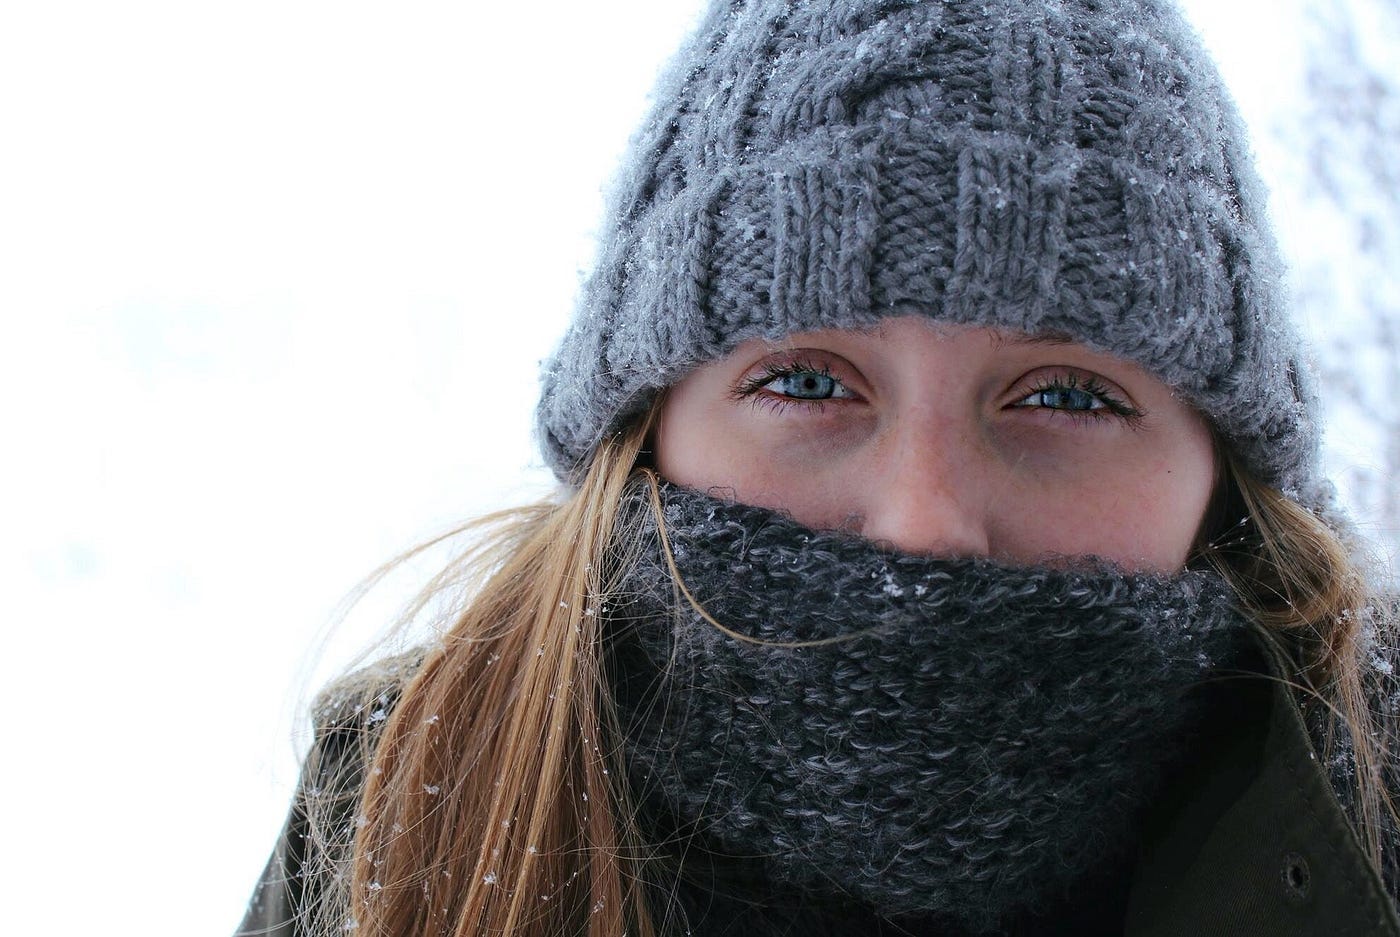 Young woman bundled up in snow, closeup